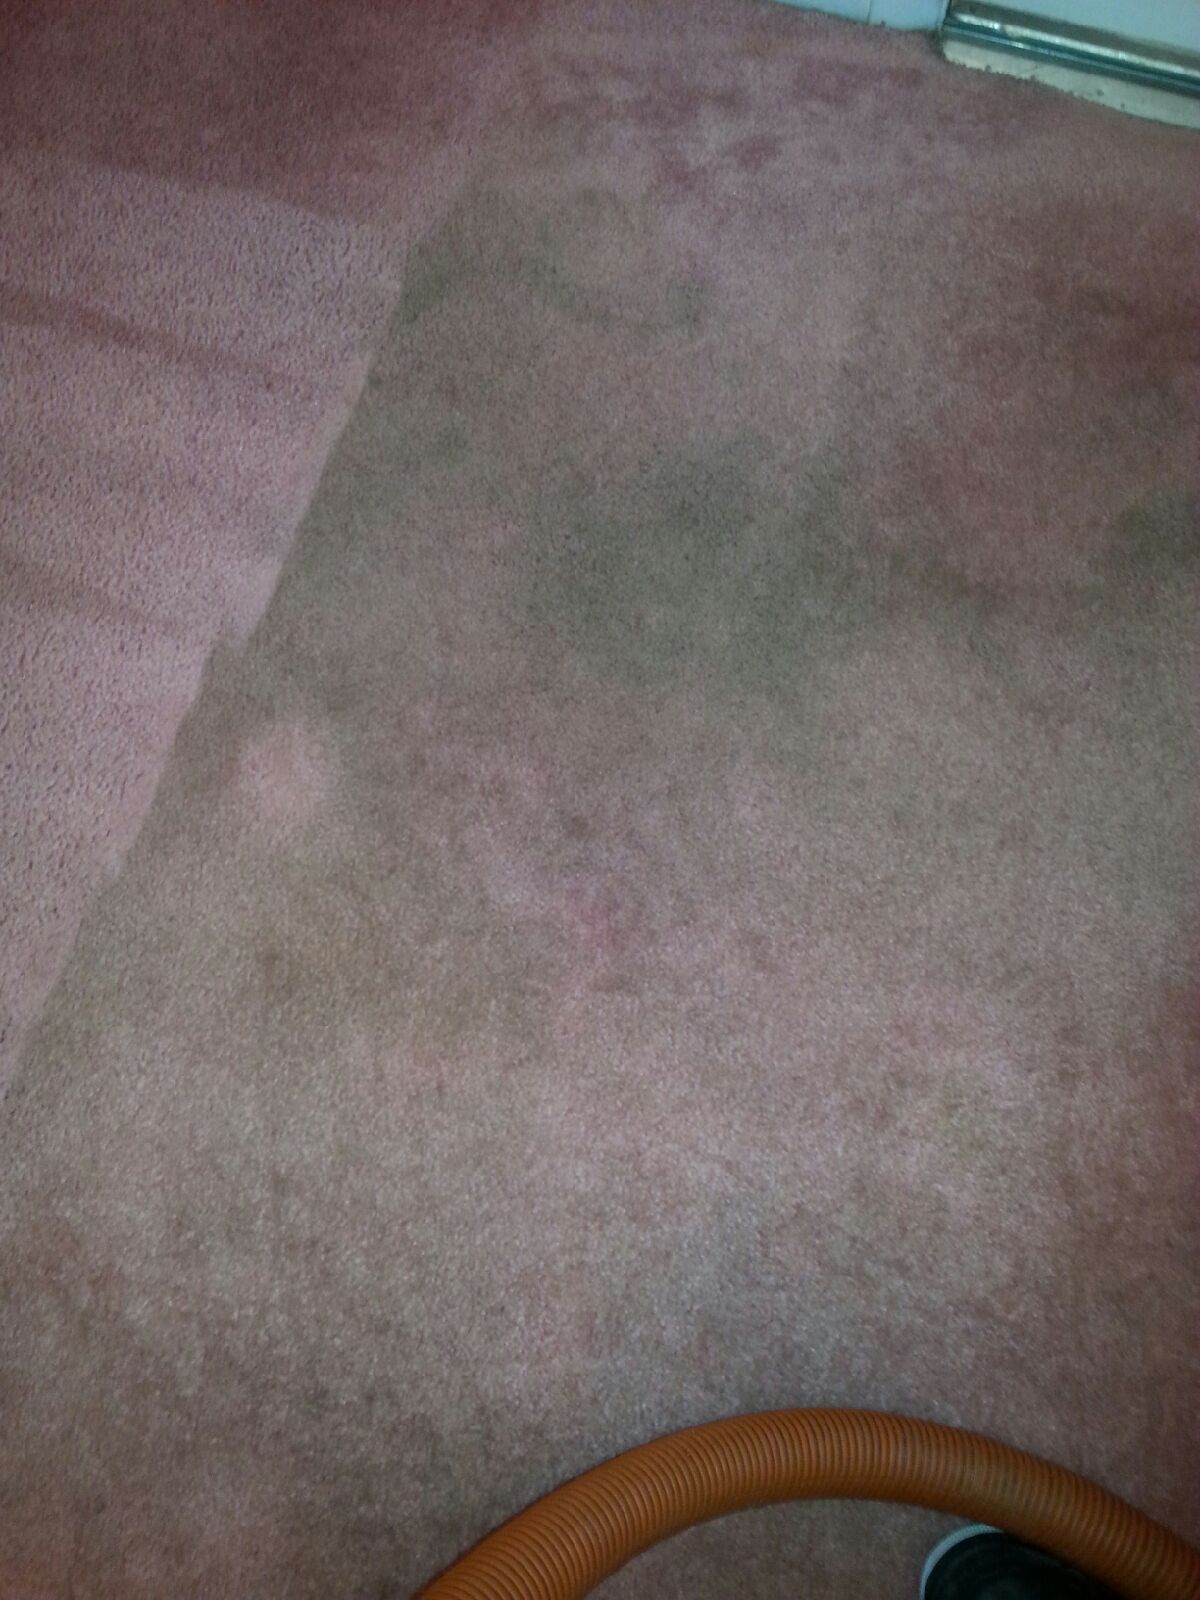 Moorestown Carpet Cleaners. Wet Carpets Need Expert Help